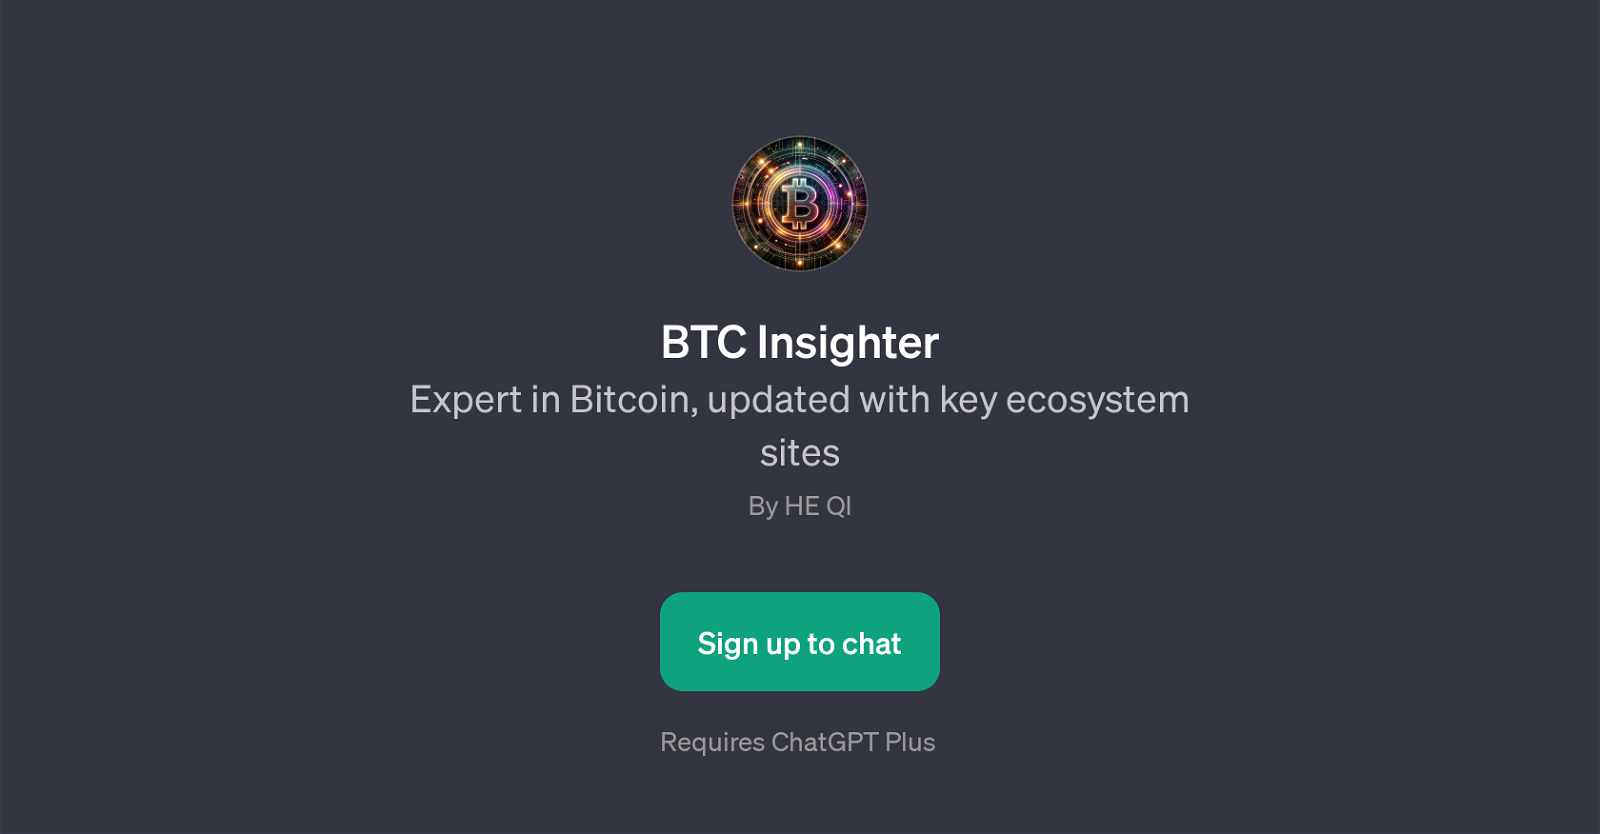 BTC Insighter website